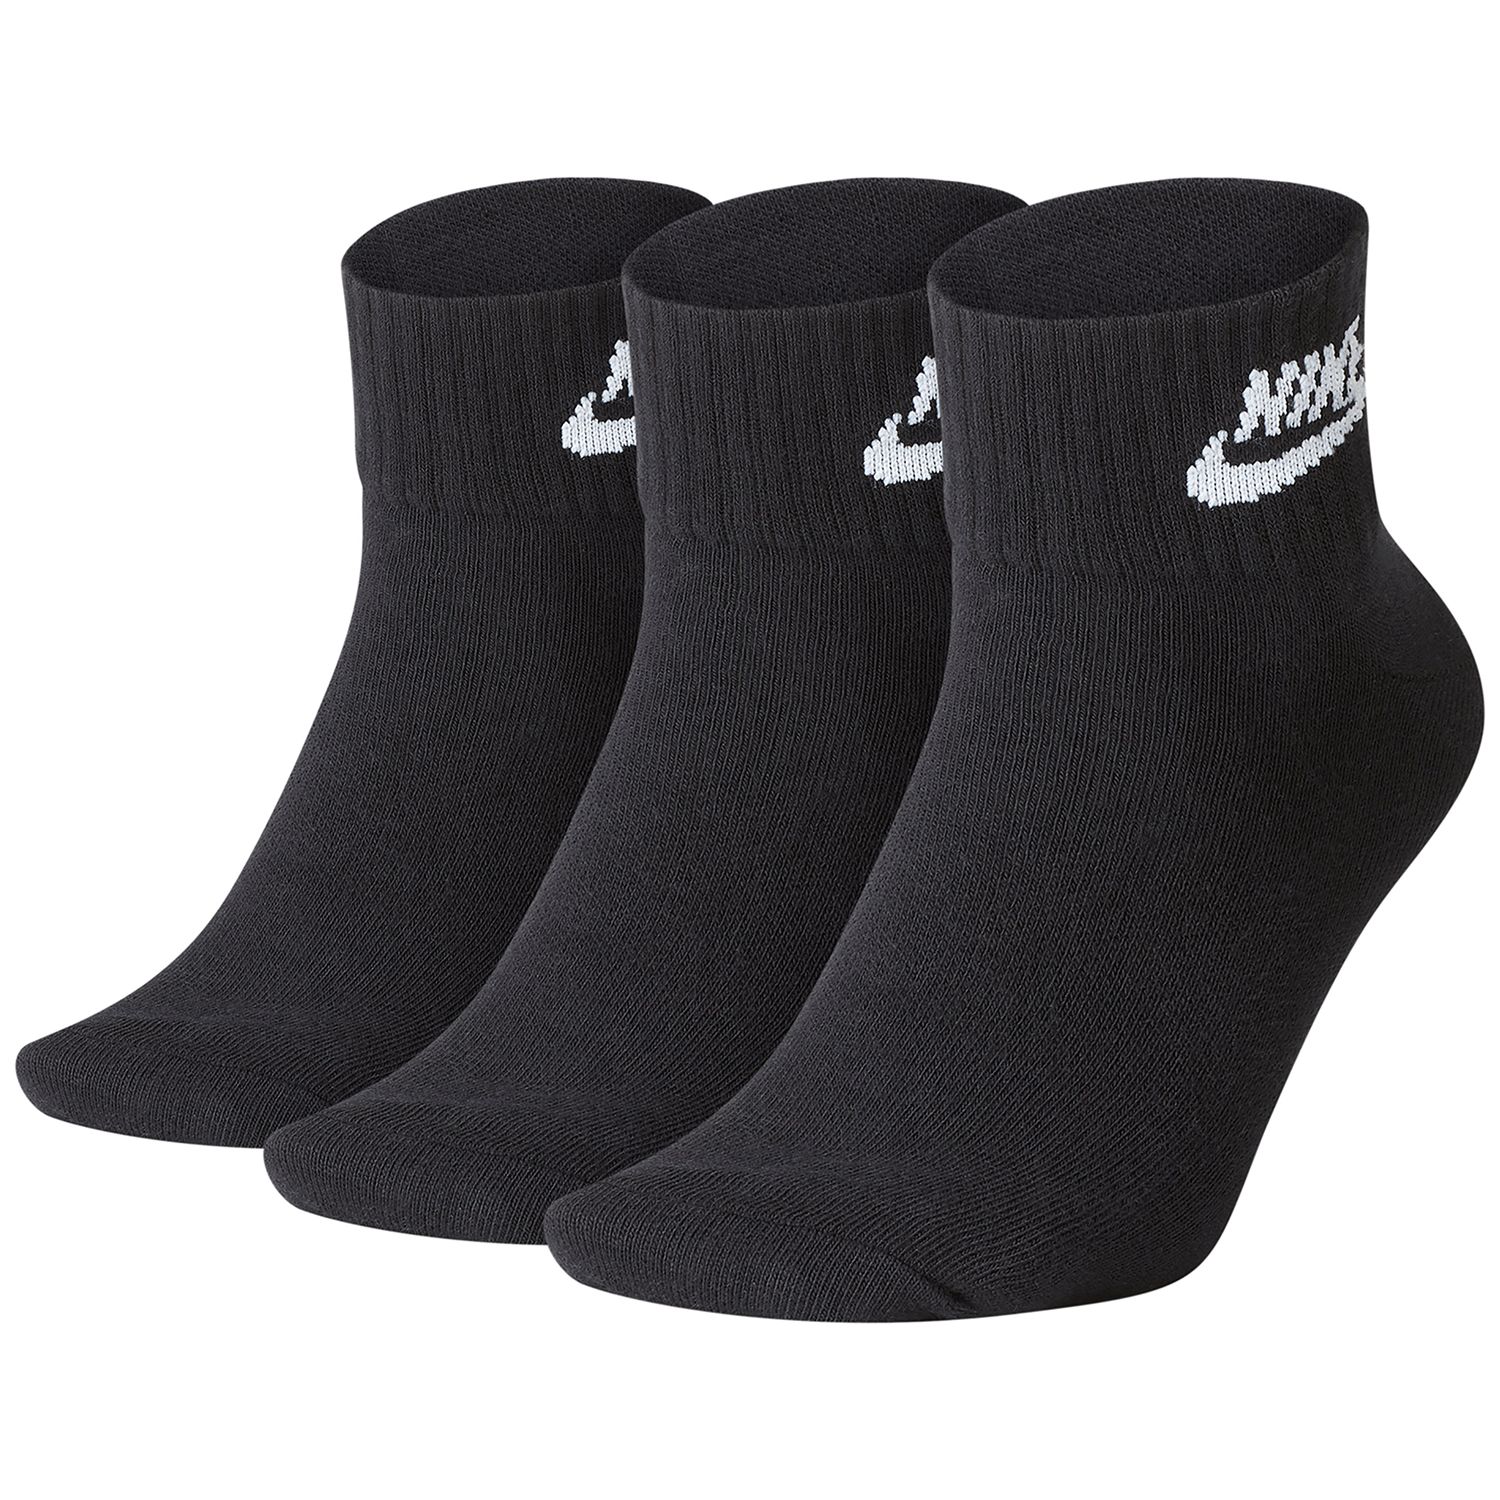 all black nike socks